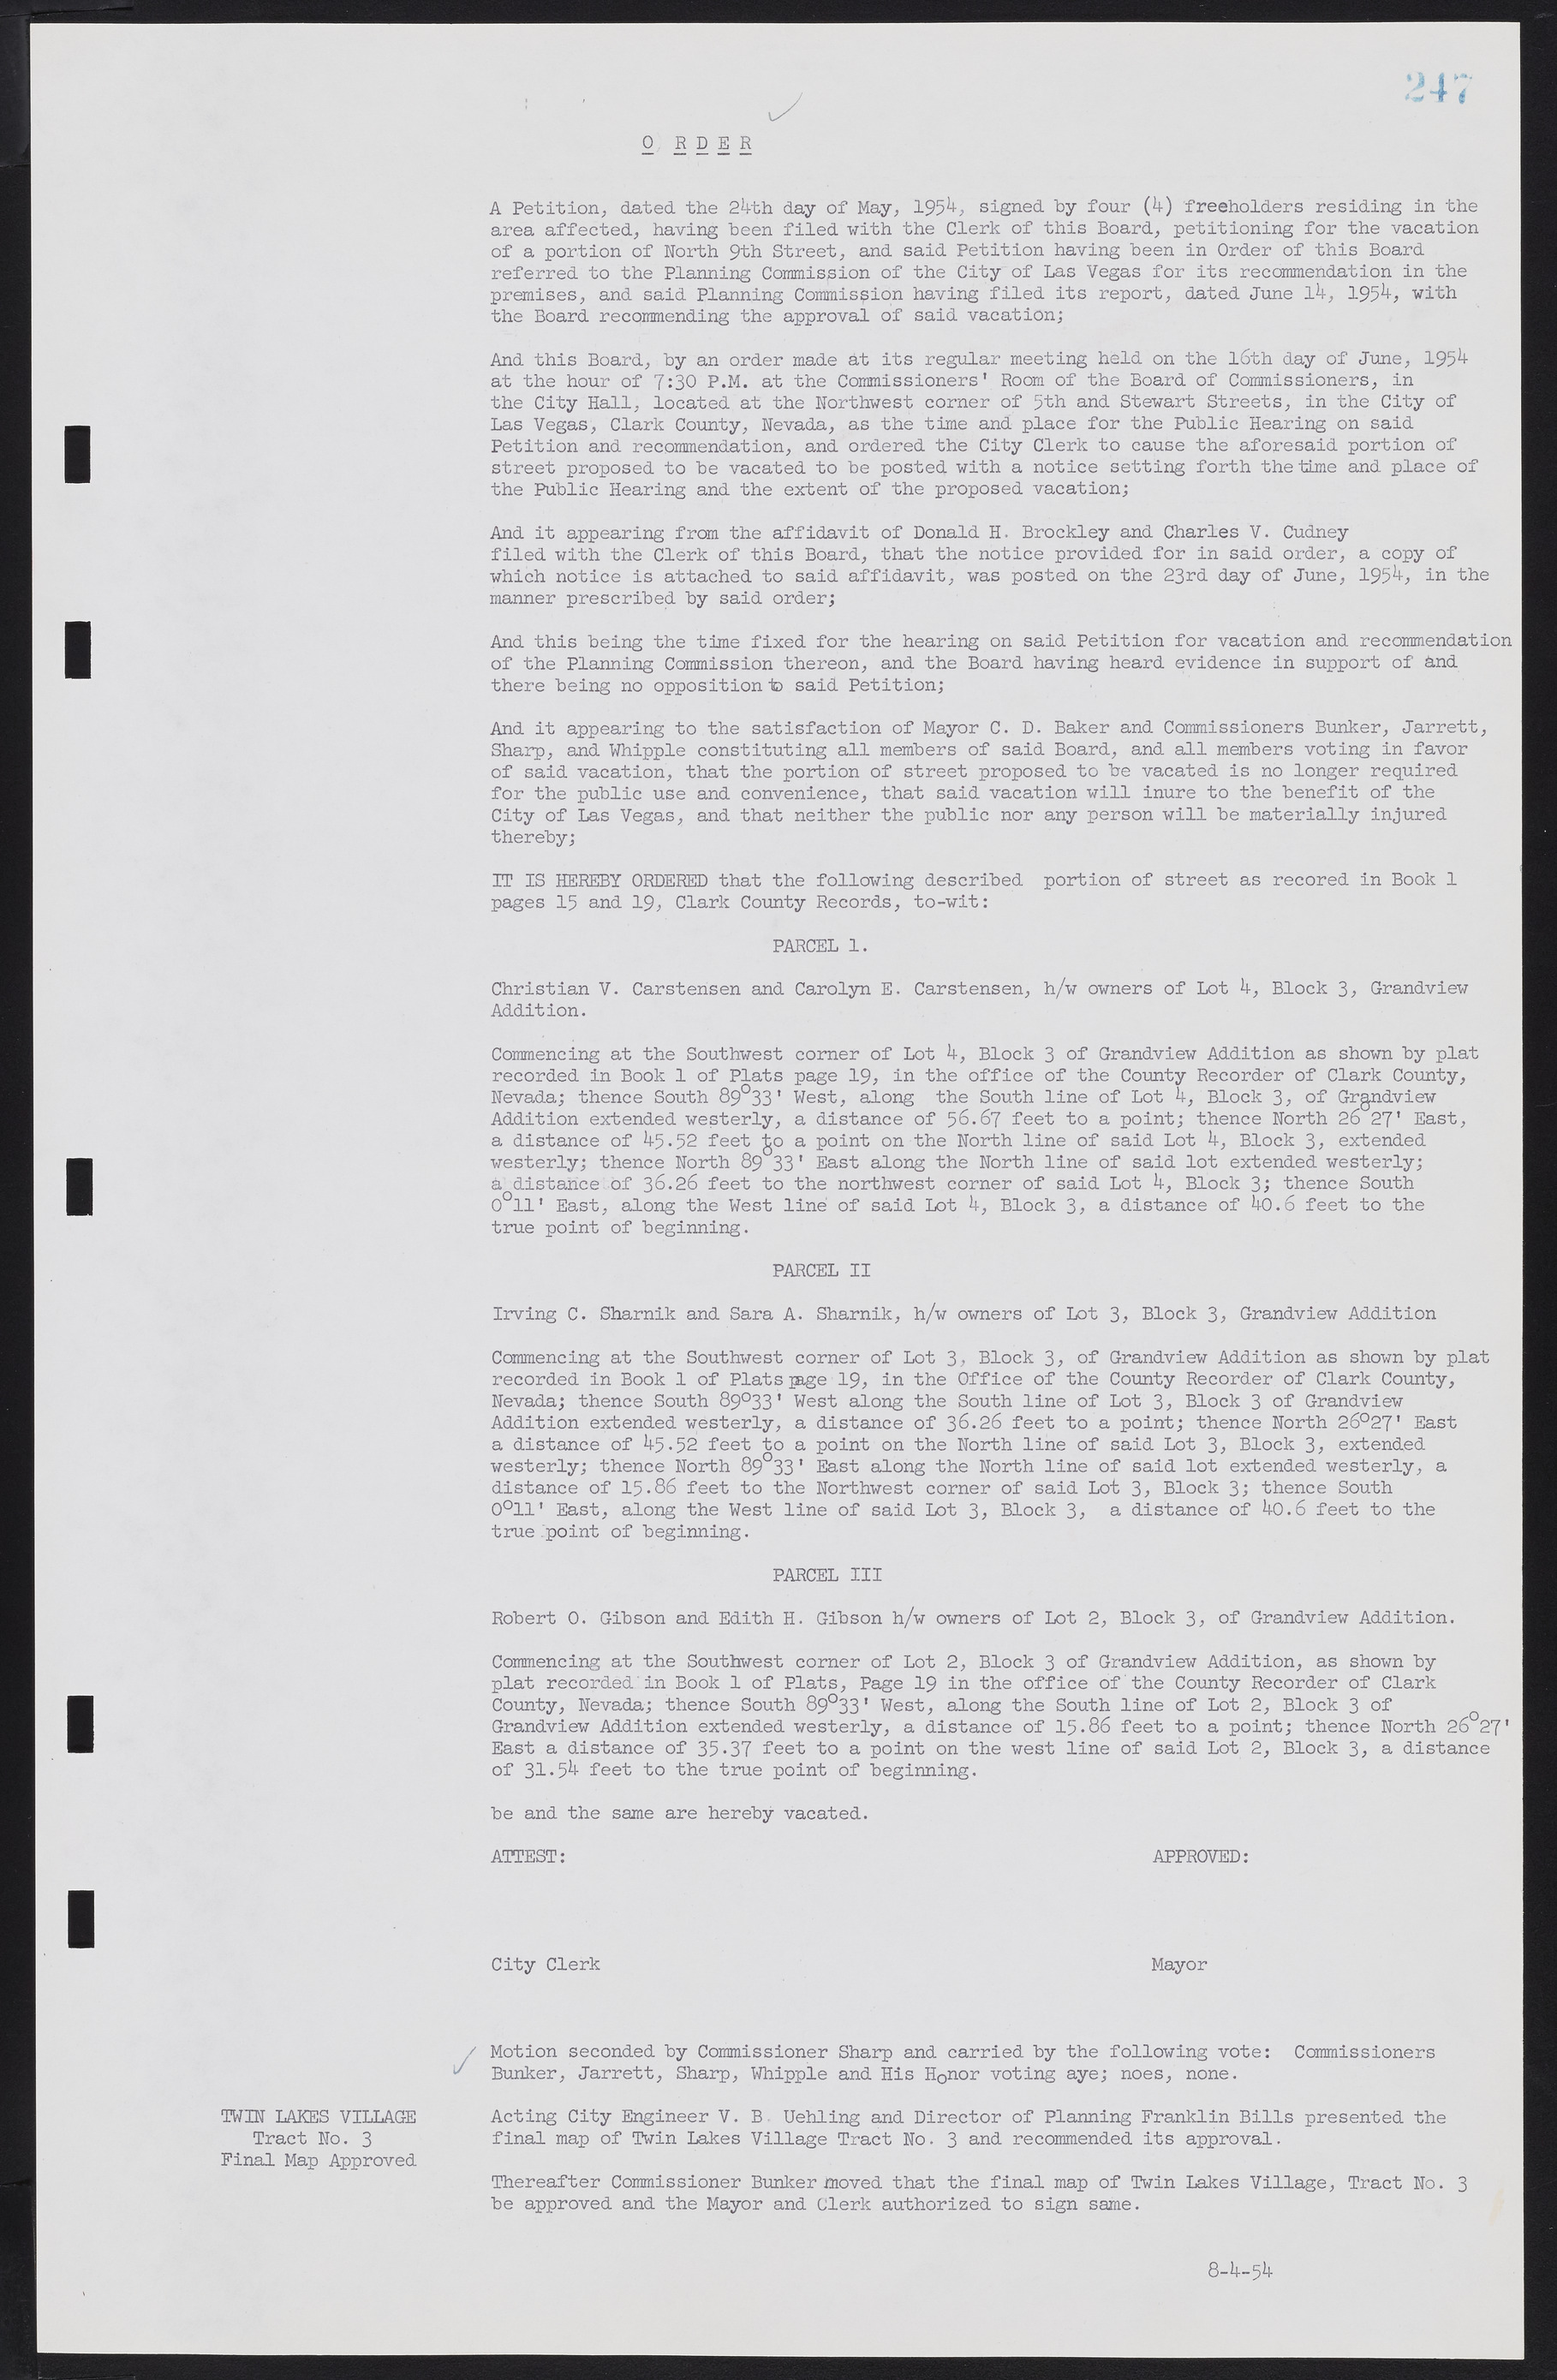 Las Vegas City Commission Minutes, February 17, 1954 to September 21, 1955, lvc000009-253